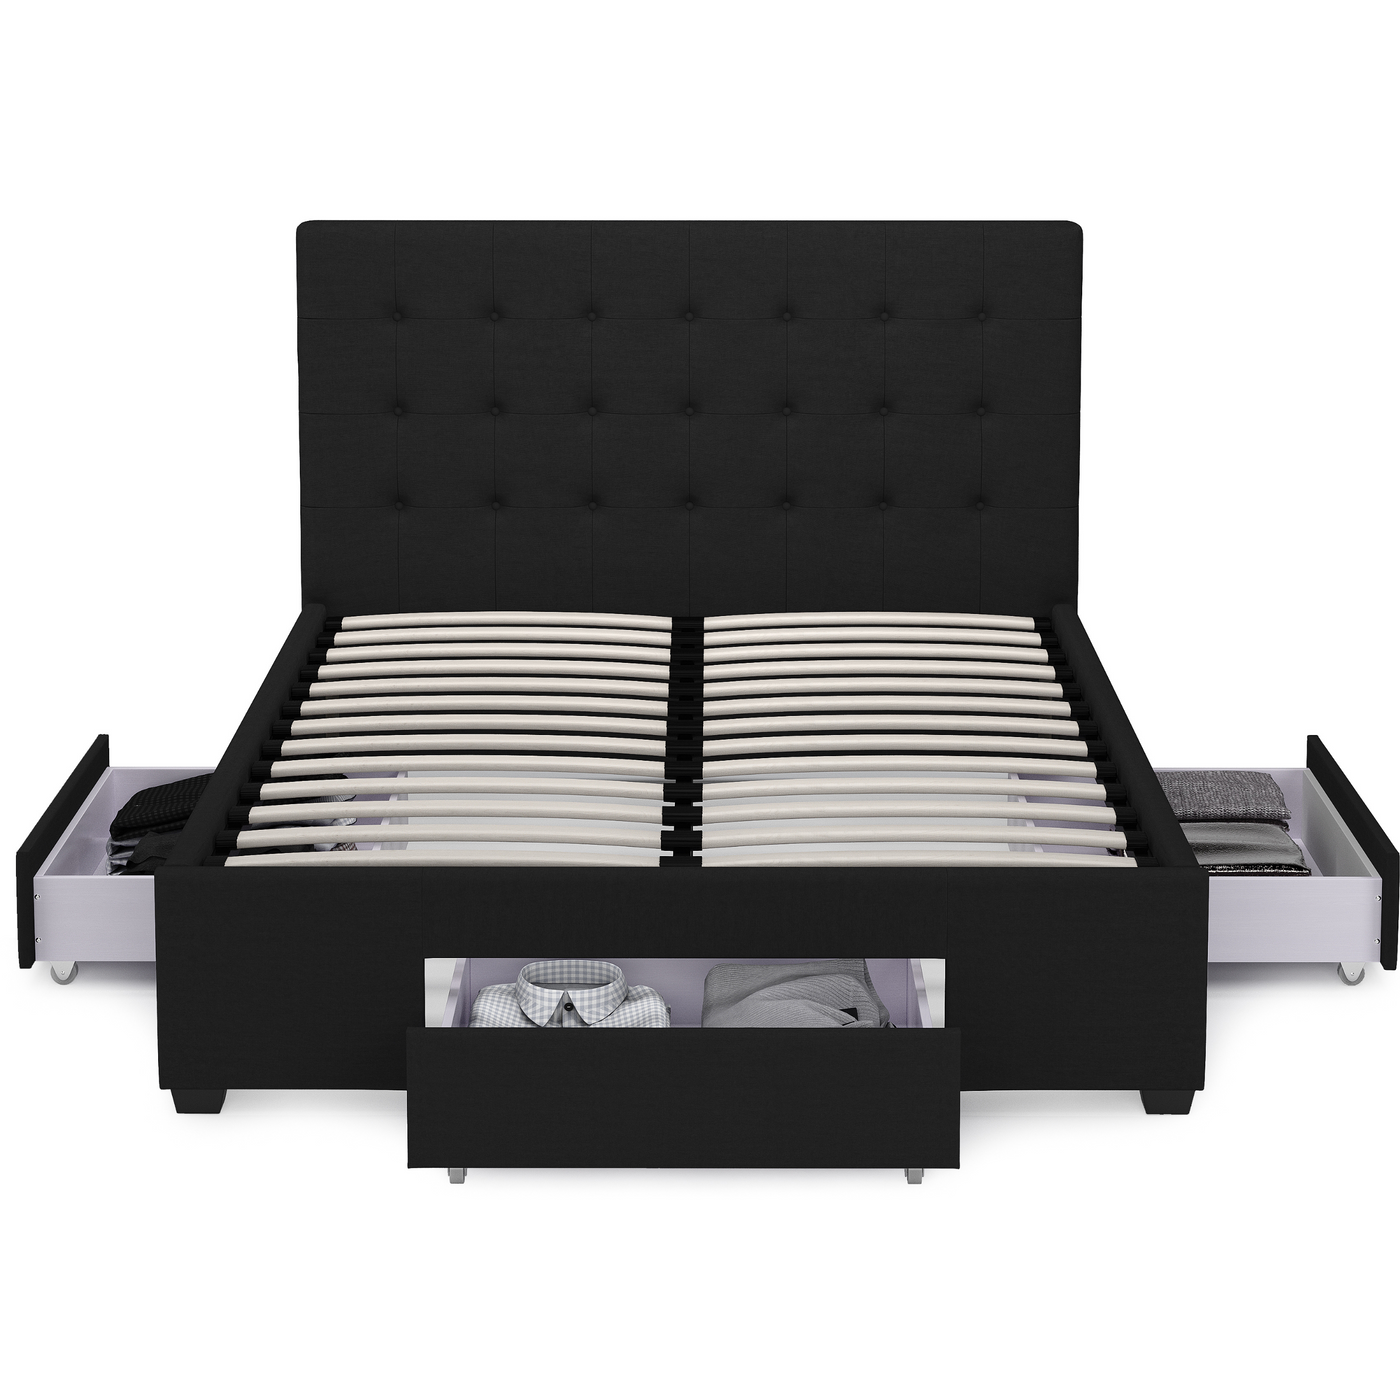 Kingston 3 Drawer Storage Bed Frame (Black Fabric) (7448054300926)